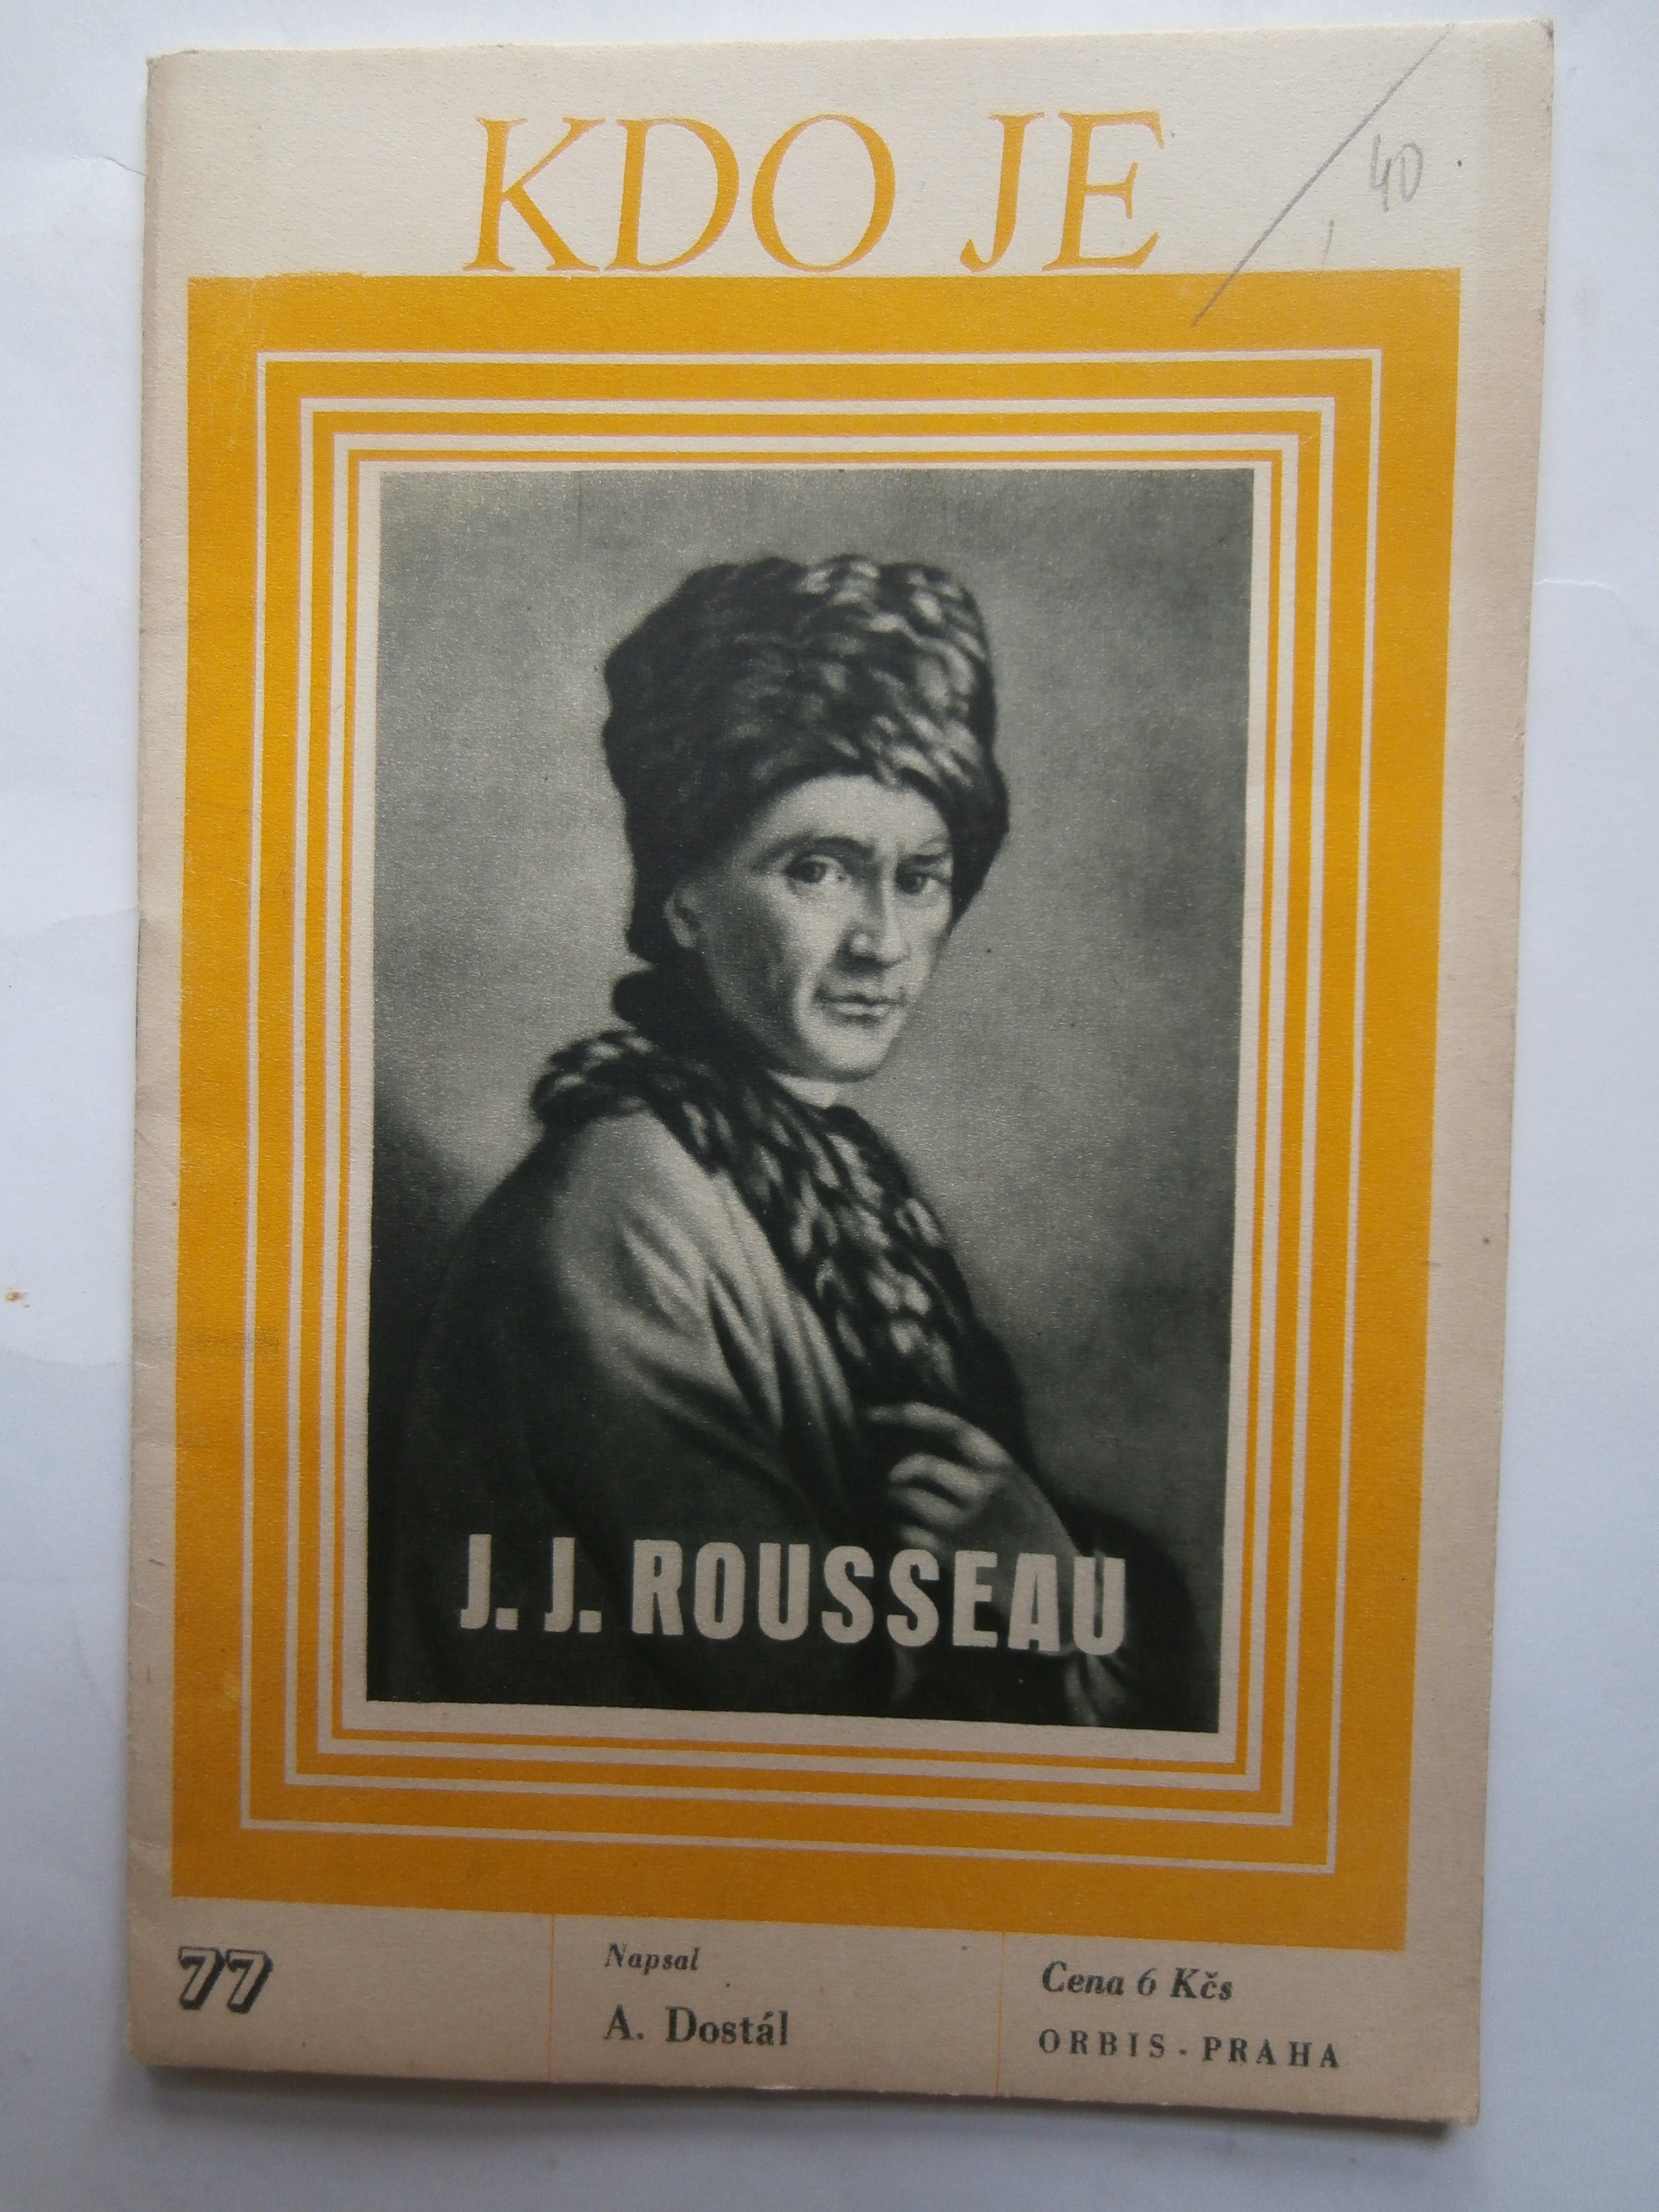 Kdo je J. J. Rousseau